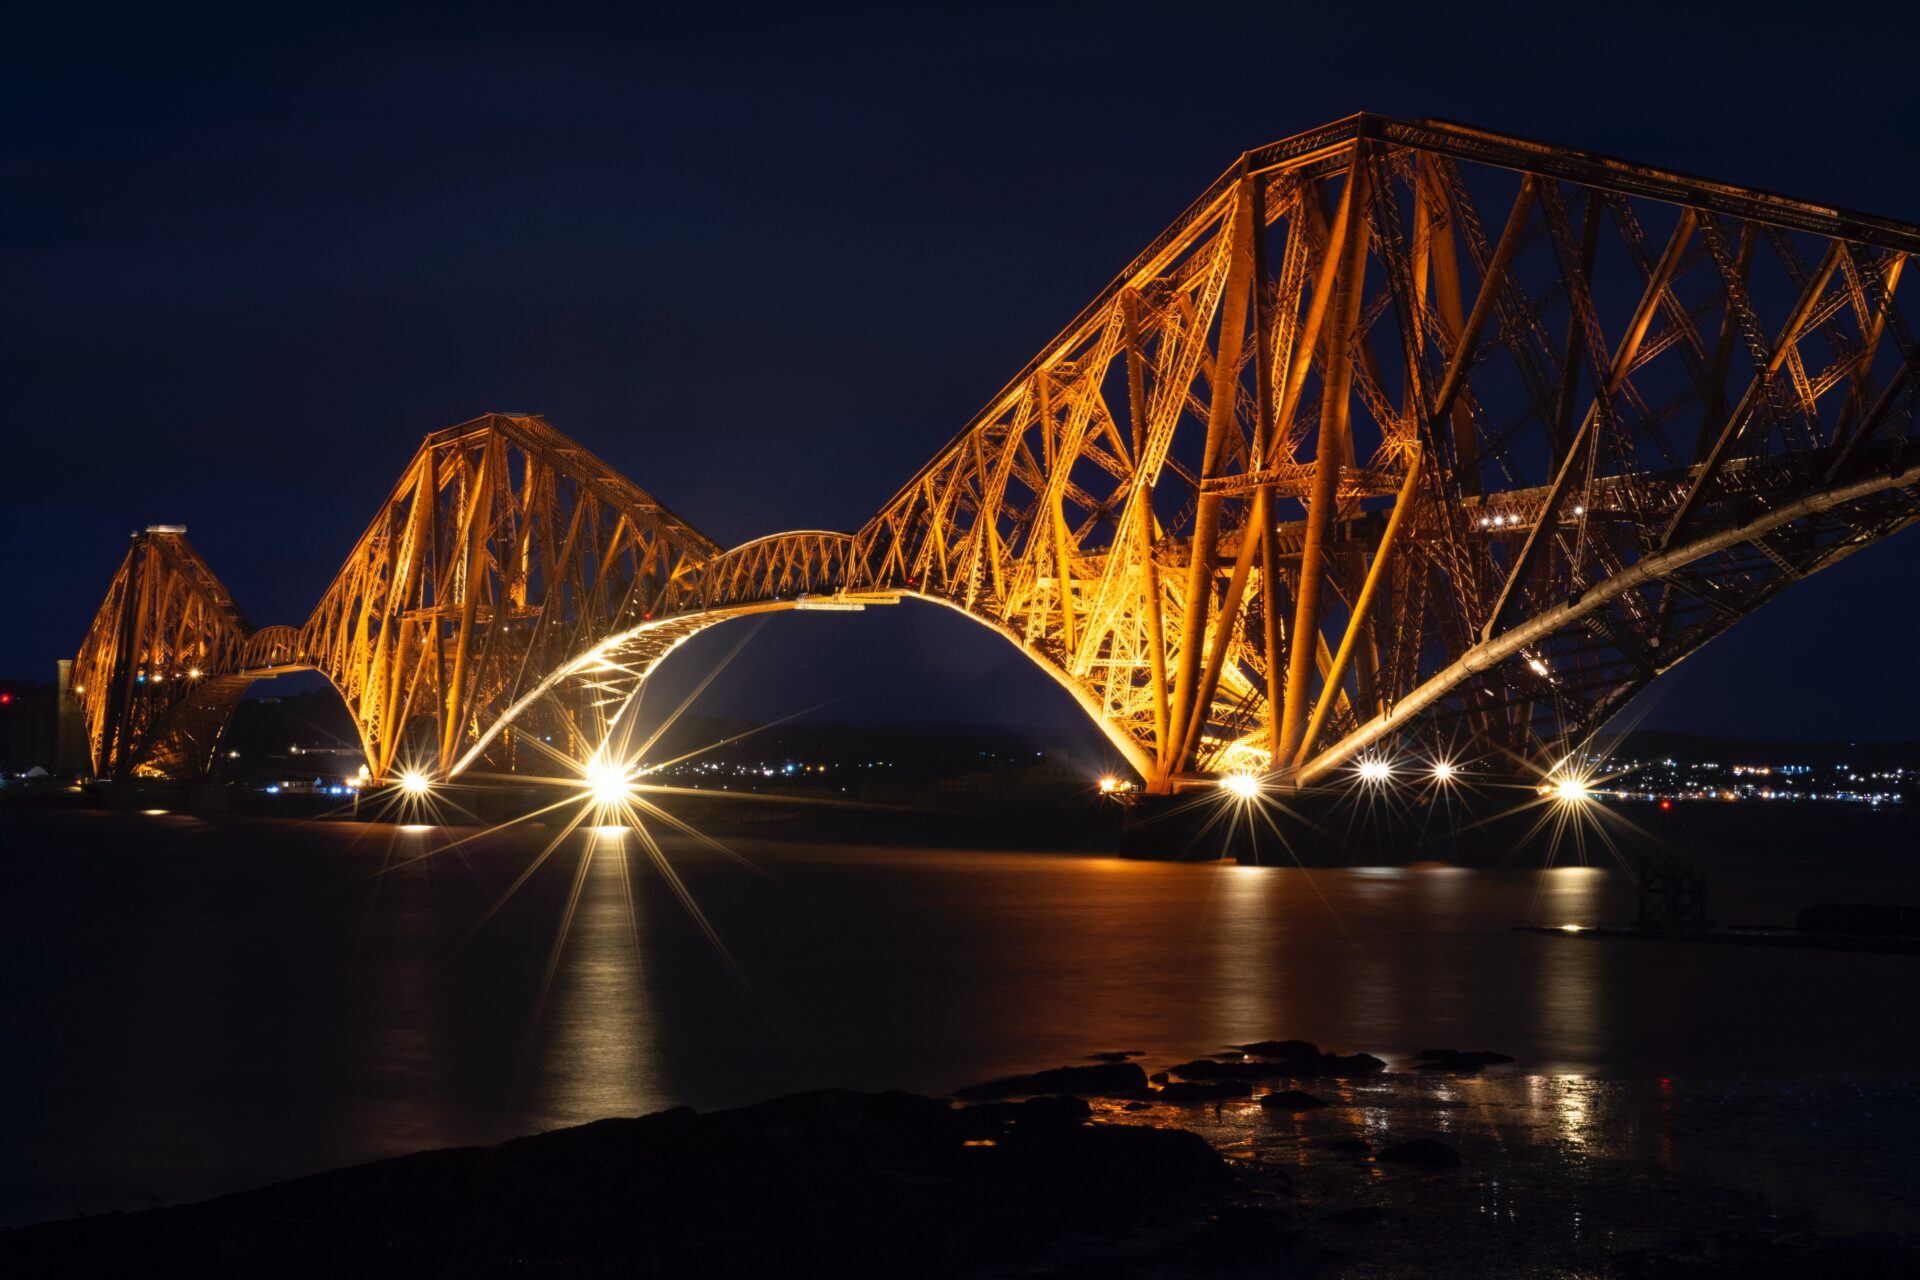 Edinburgh's Forth Rail Bridge lit at night (Photo by Gordon Robbie Hendry on Unsplash)